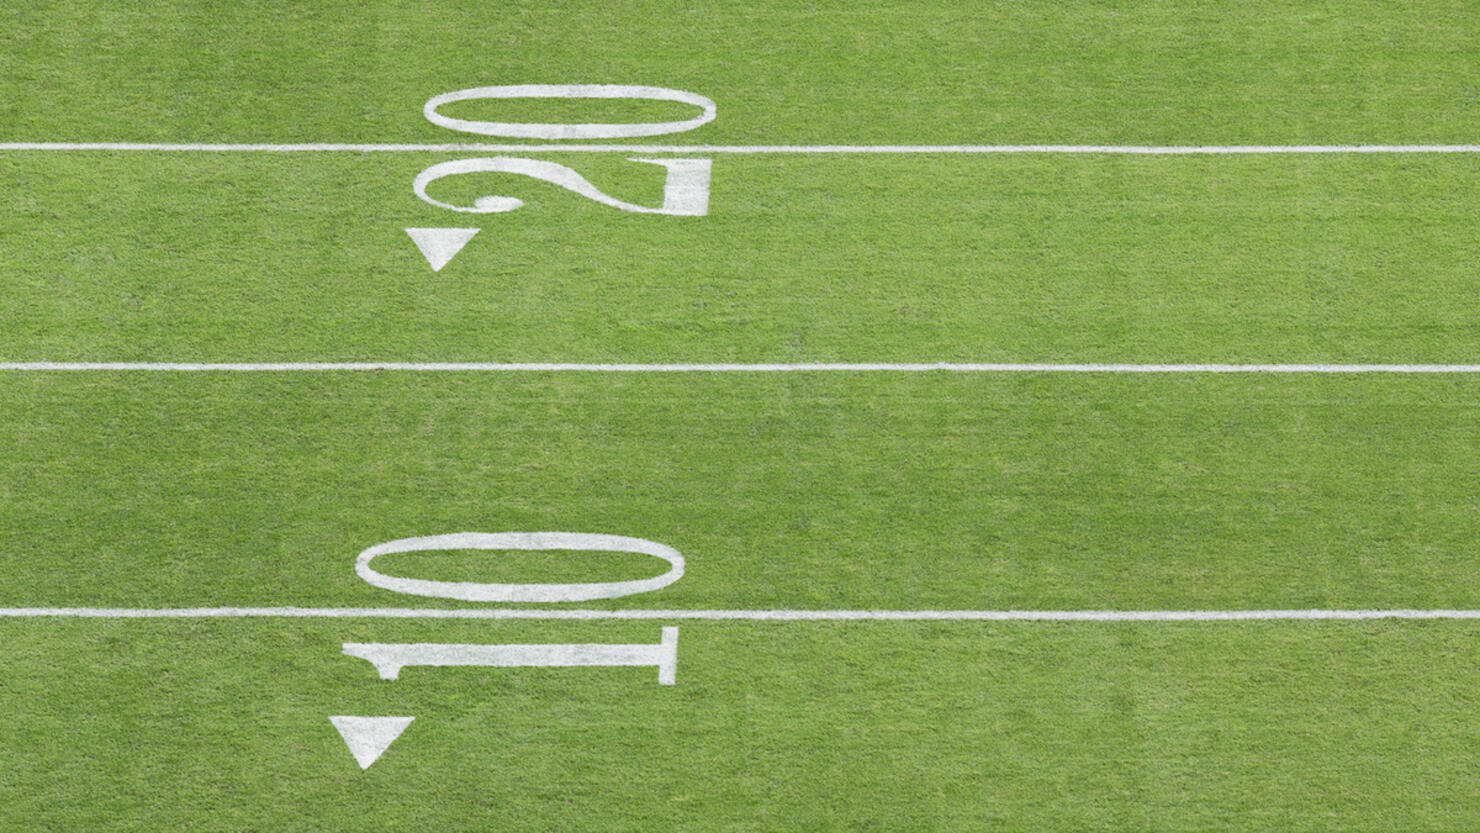 Yard Lines on Football Field